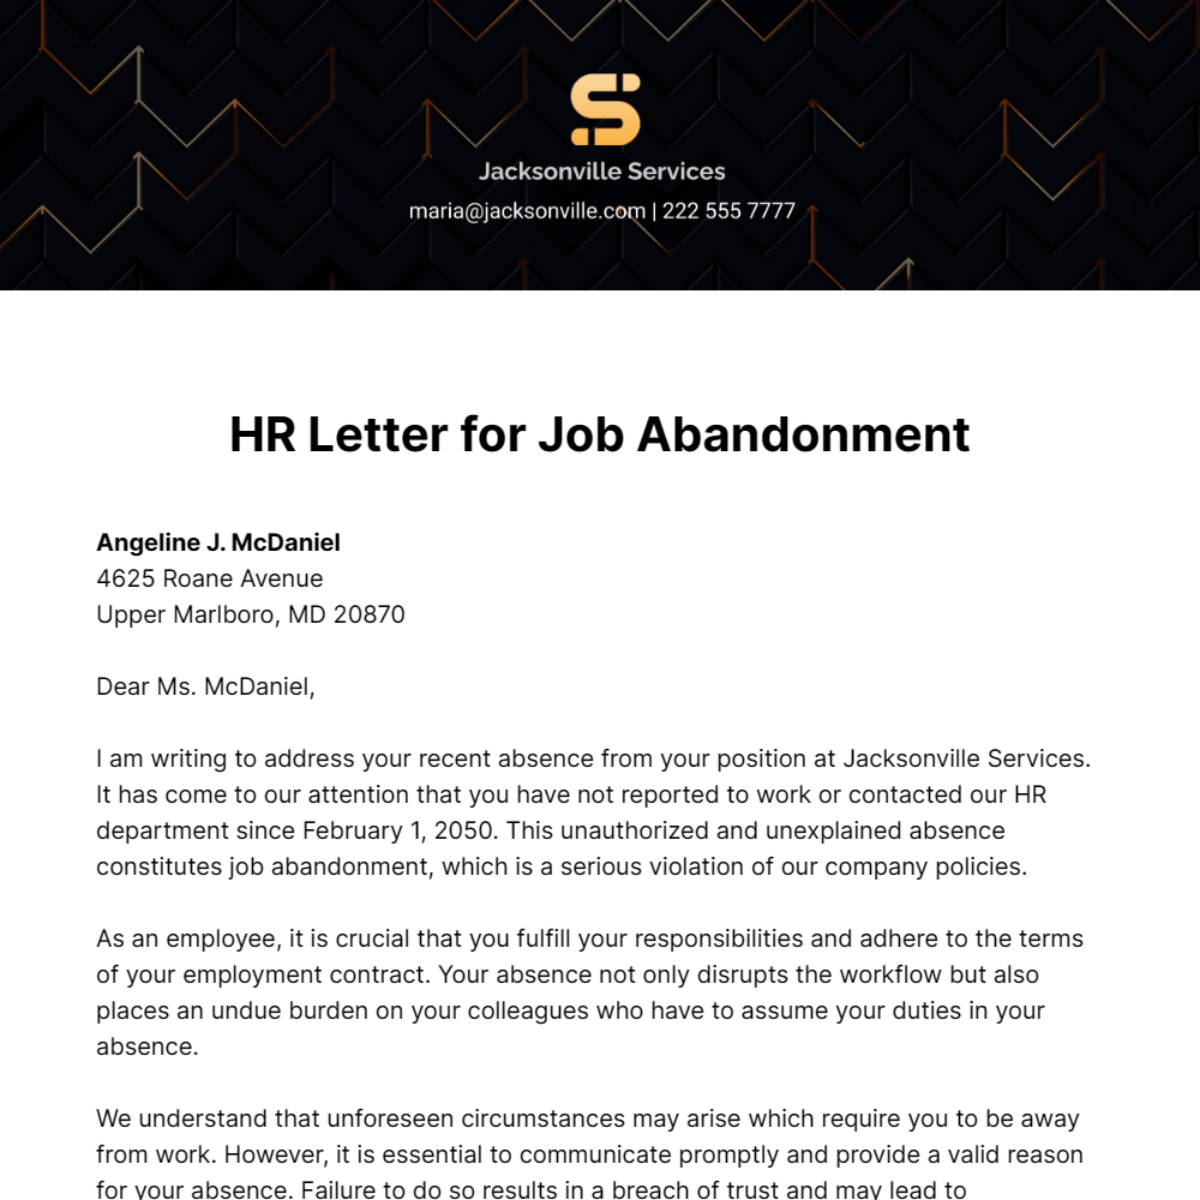 HR Letter for Job Abandonment Template